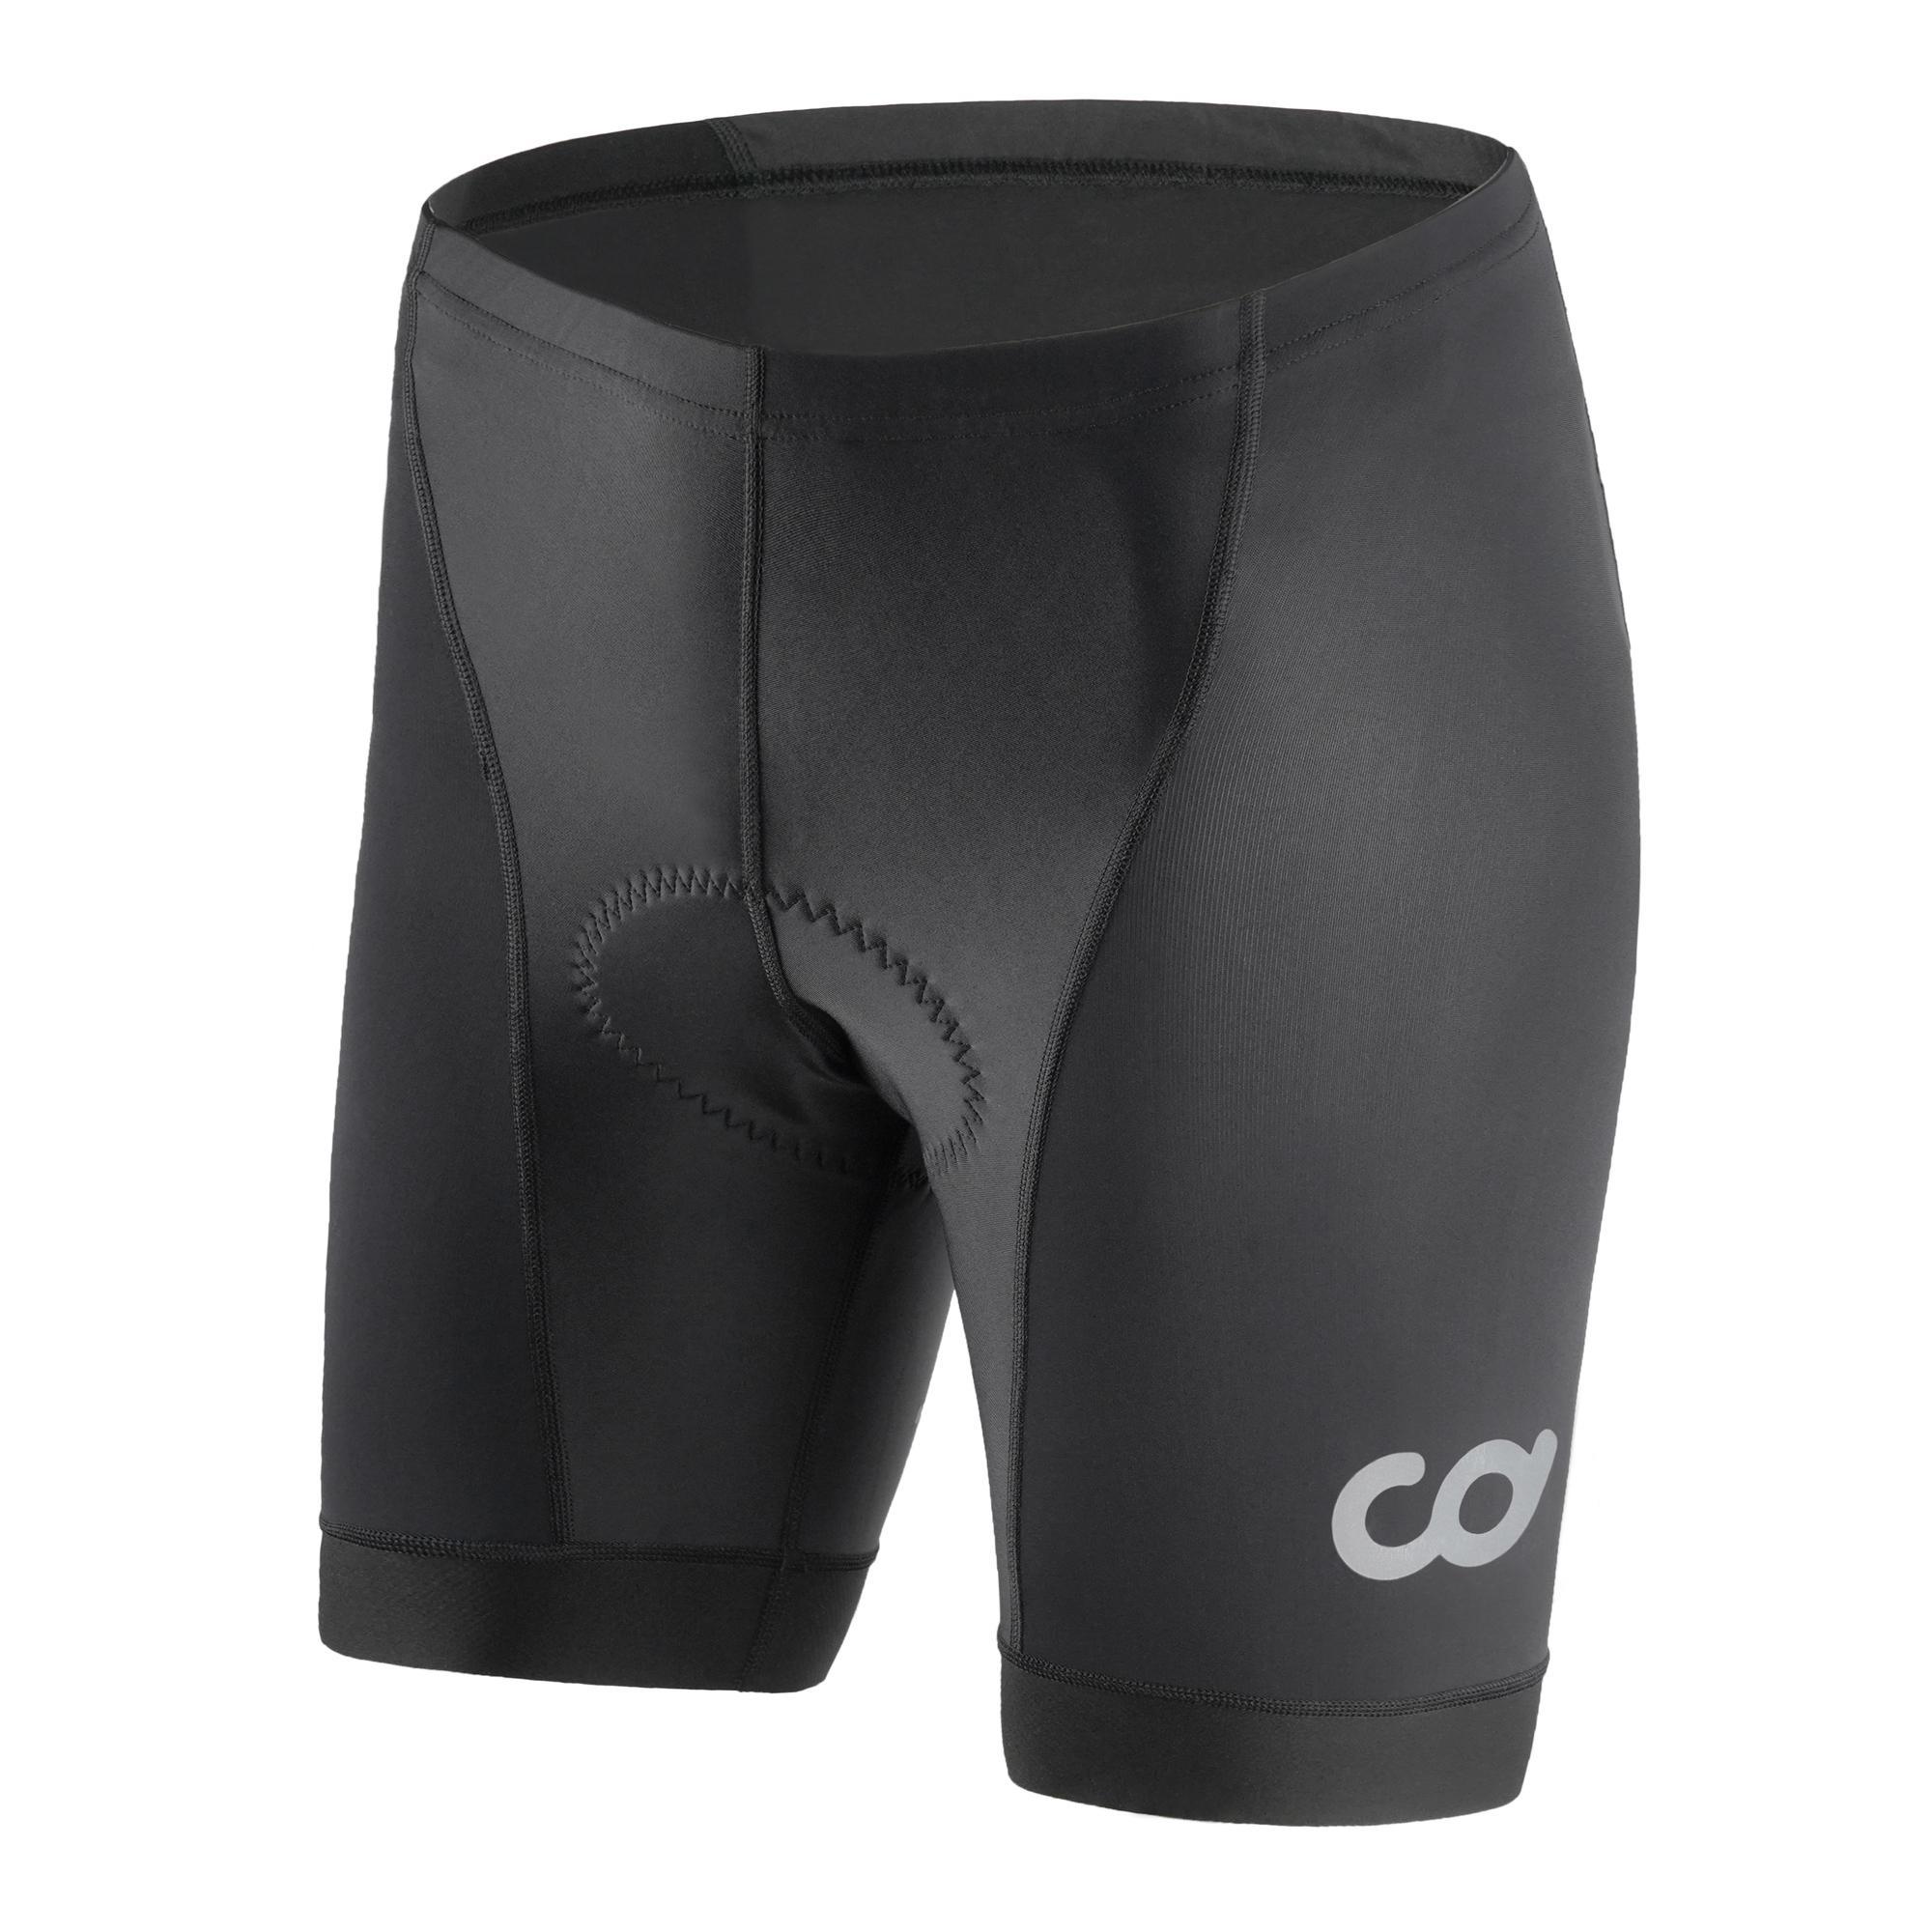 CD Men's Premium Quality Cycling Padded Shorts Pants with 3D Padding - High Waist Anti-slip Road MTB Bicycle Biking Riding Tights Underwear - Size XL